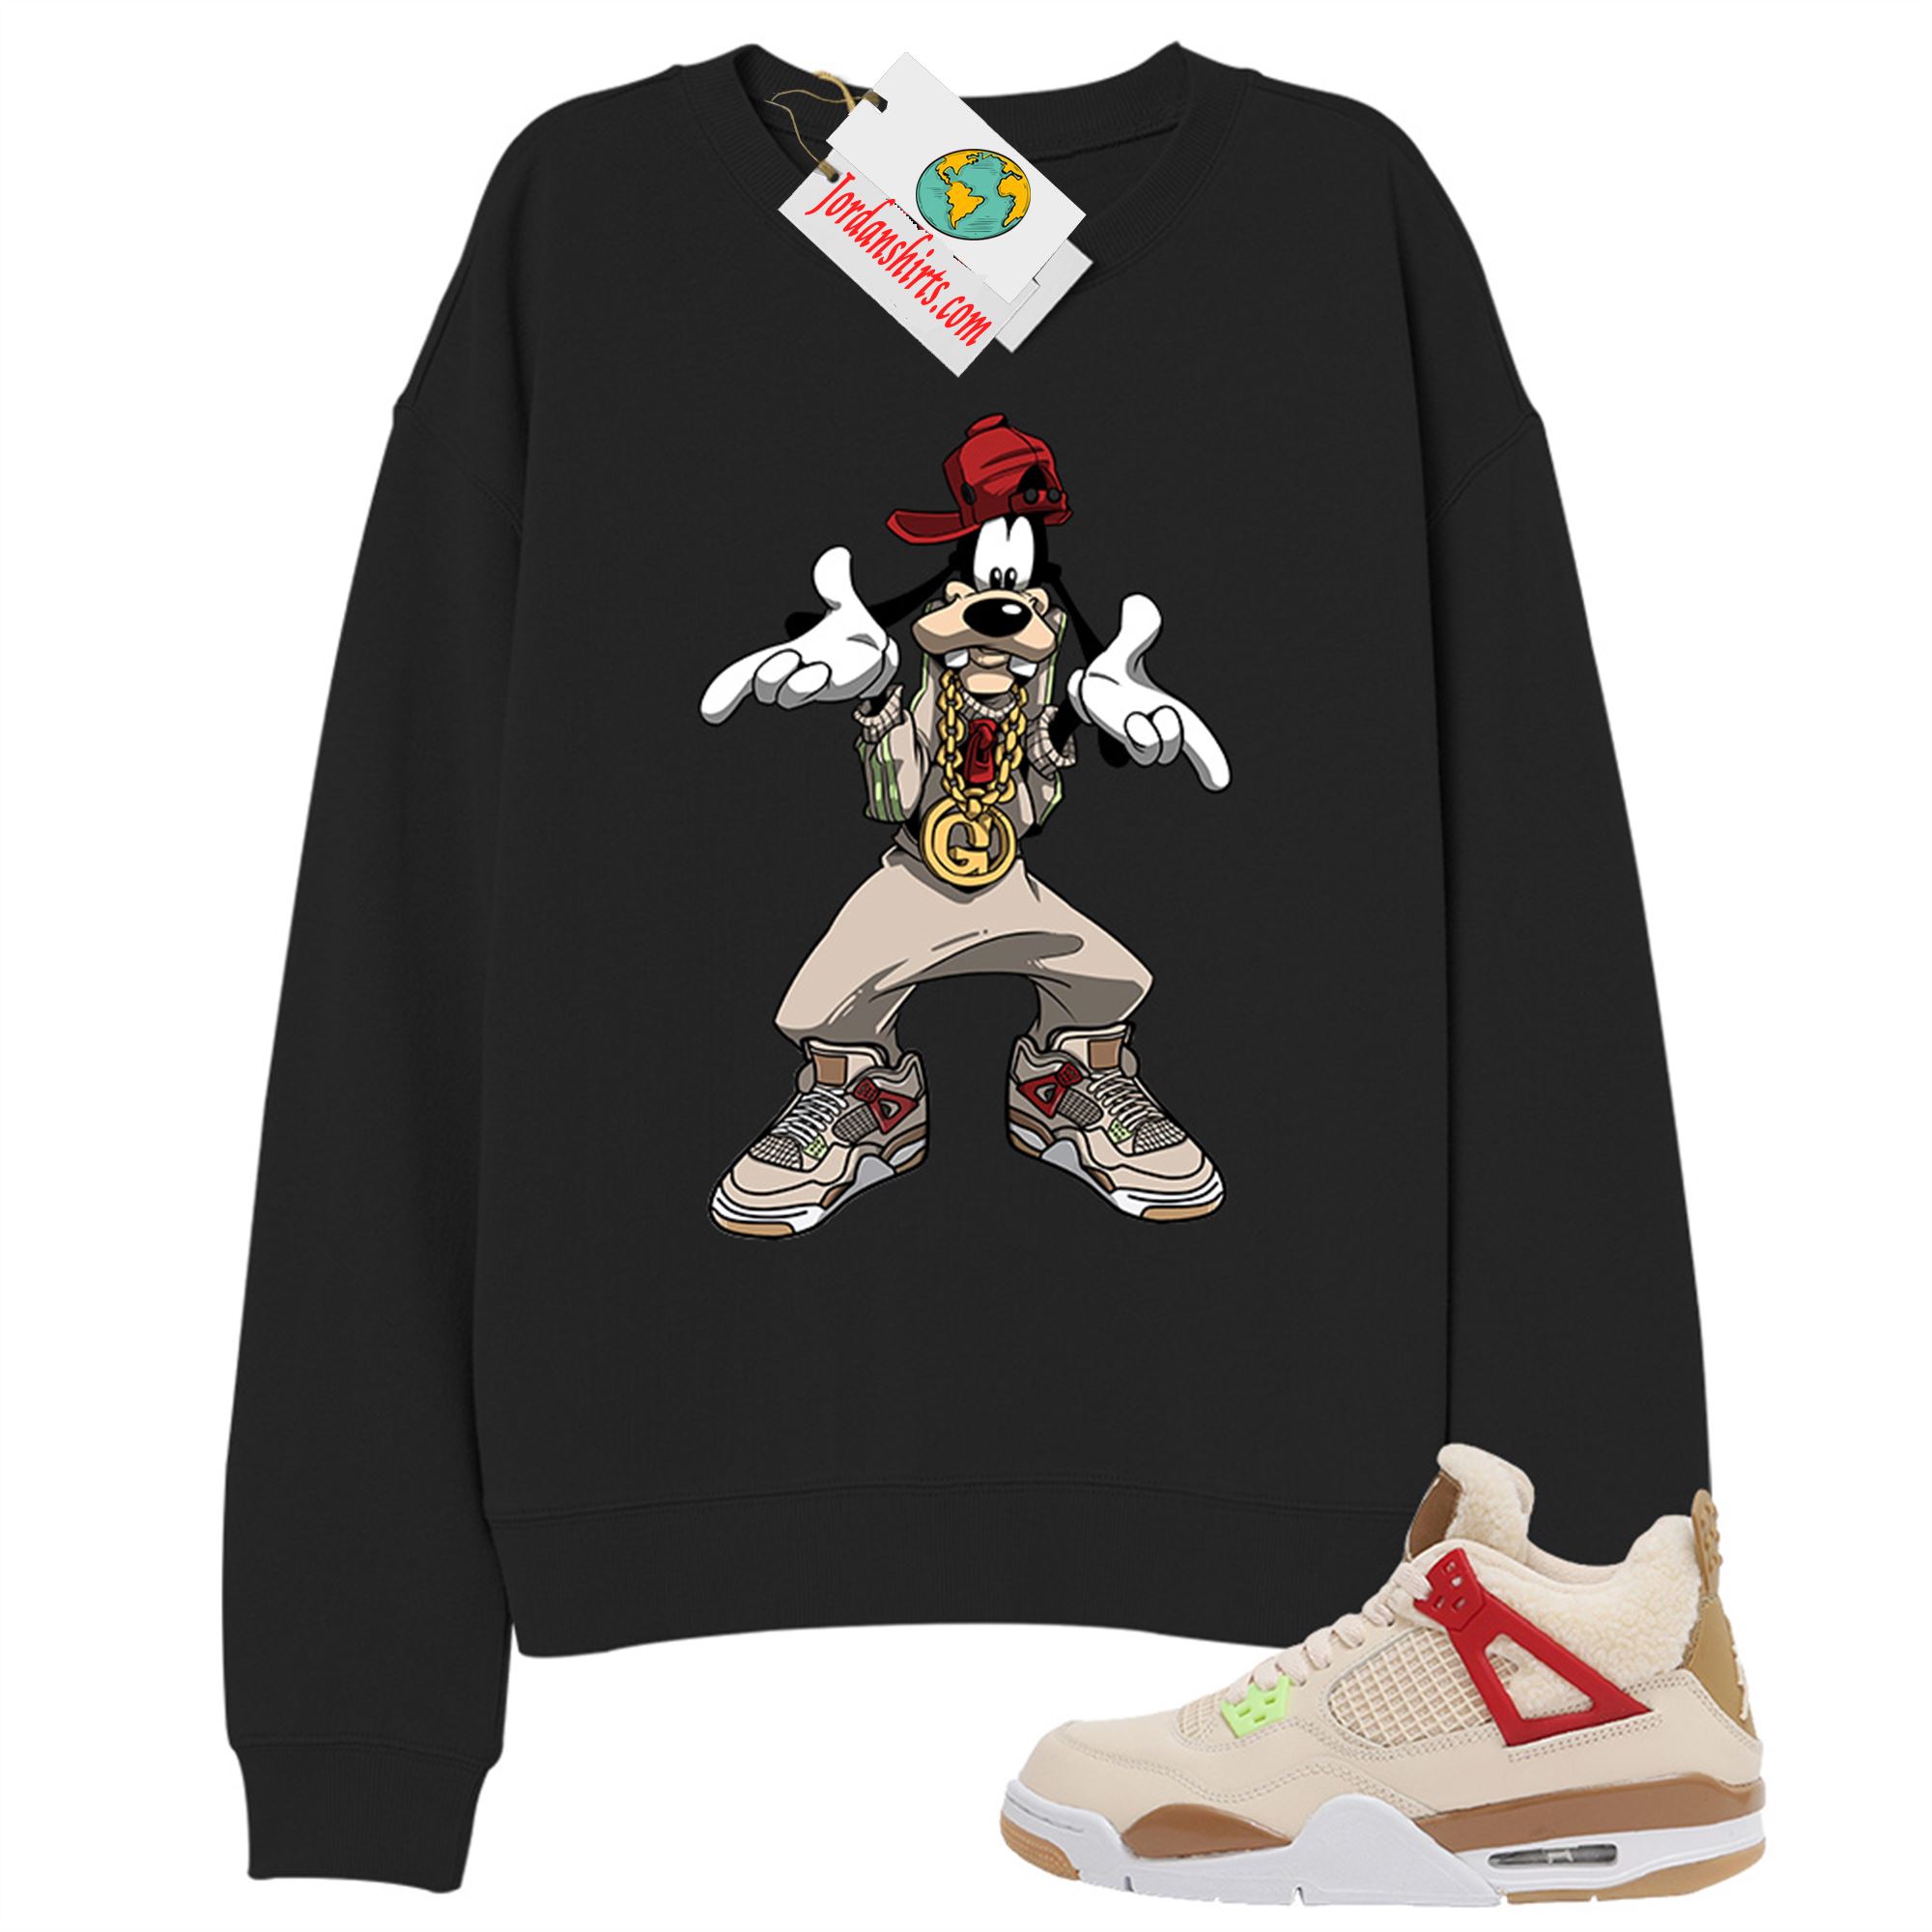 Jordan 4 Sweatshirt, Goofy Black Sweatshirt Air Jordan 4 Wild Thing 4s Plus Size Up To 5xl